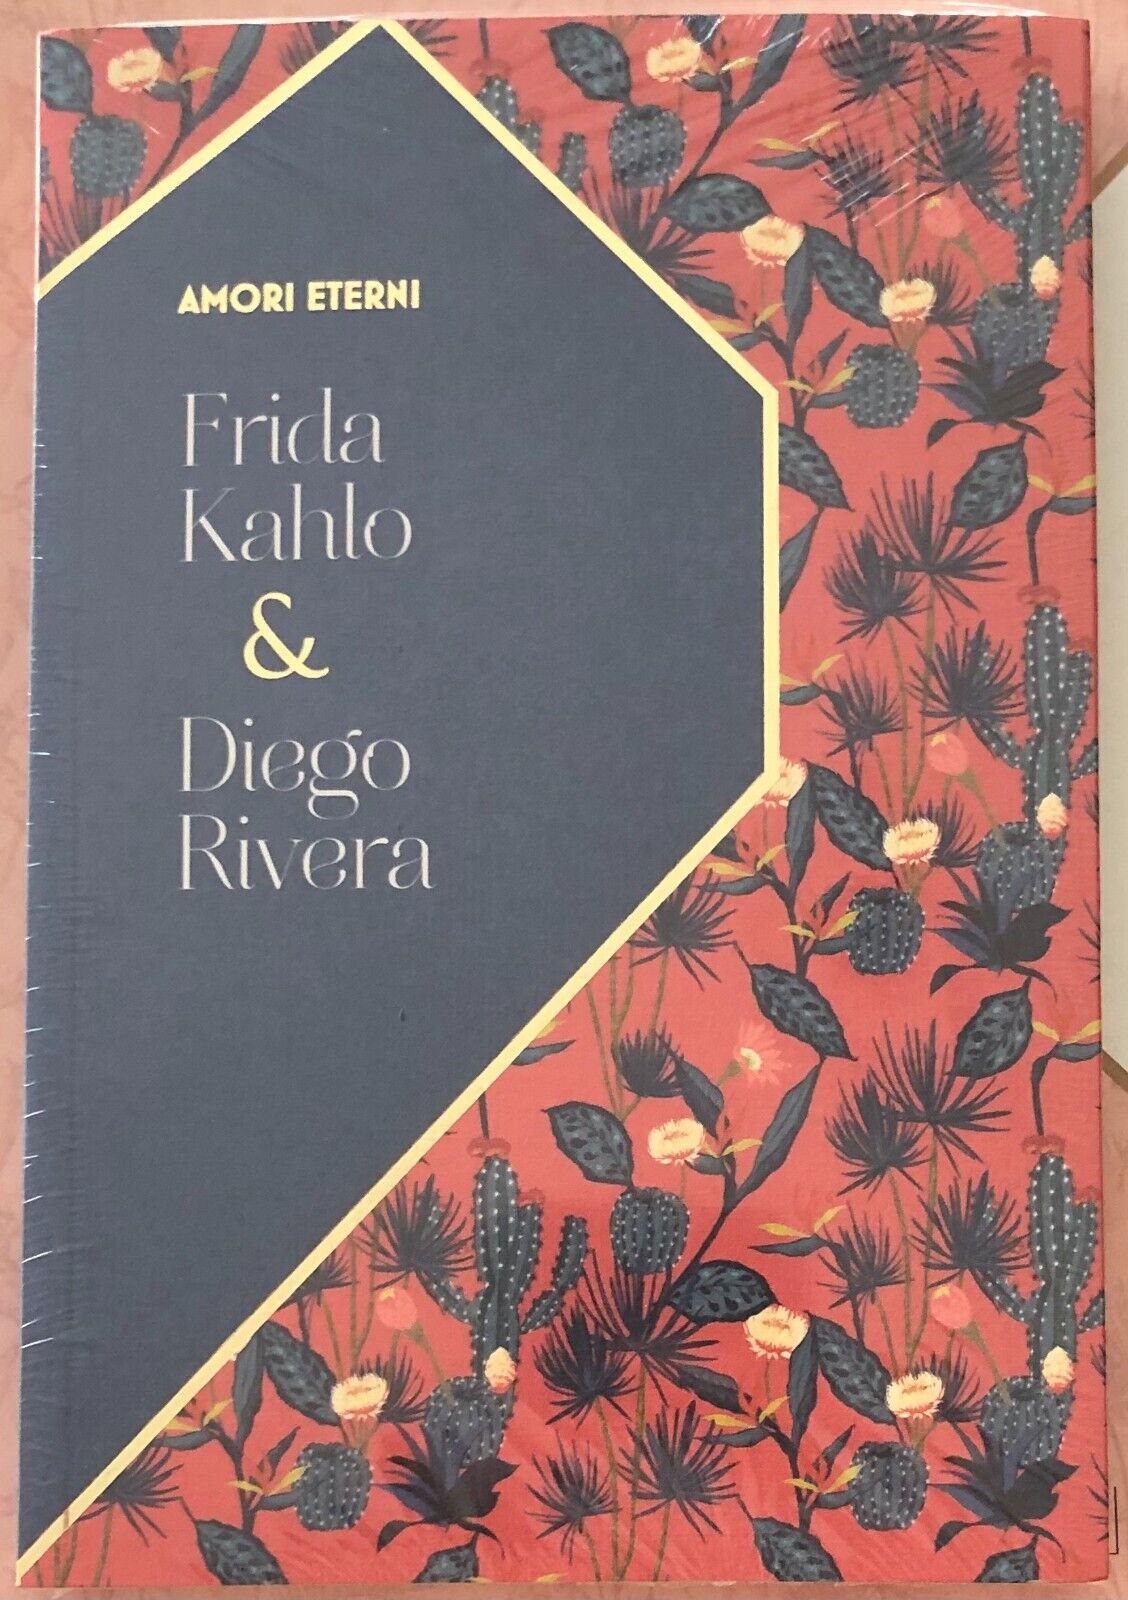 Amori eterni n. 1 - Frida Kahlo & Diego Rivera di Aa.vv.,  2022,  Emse Editori